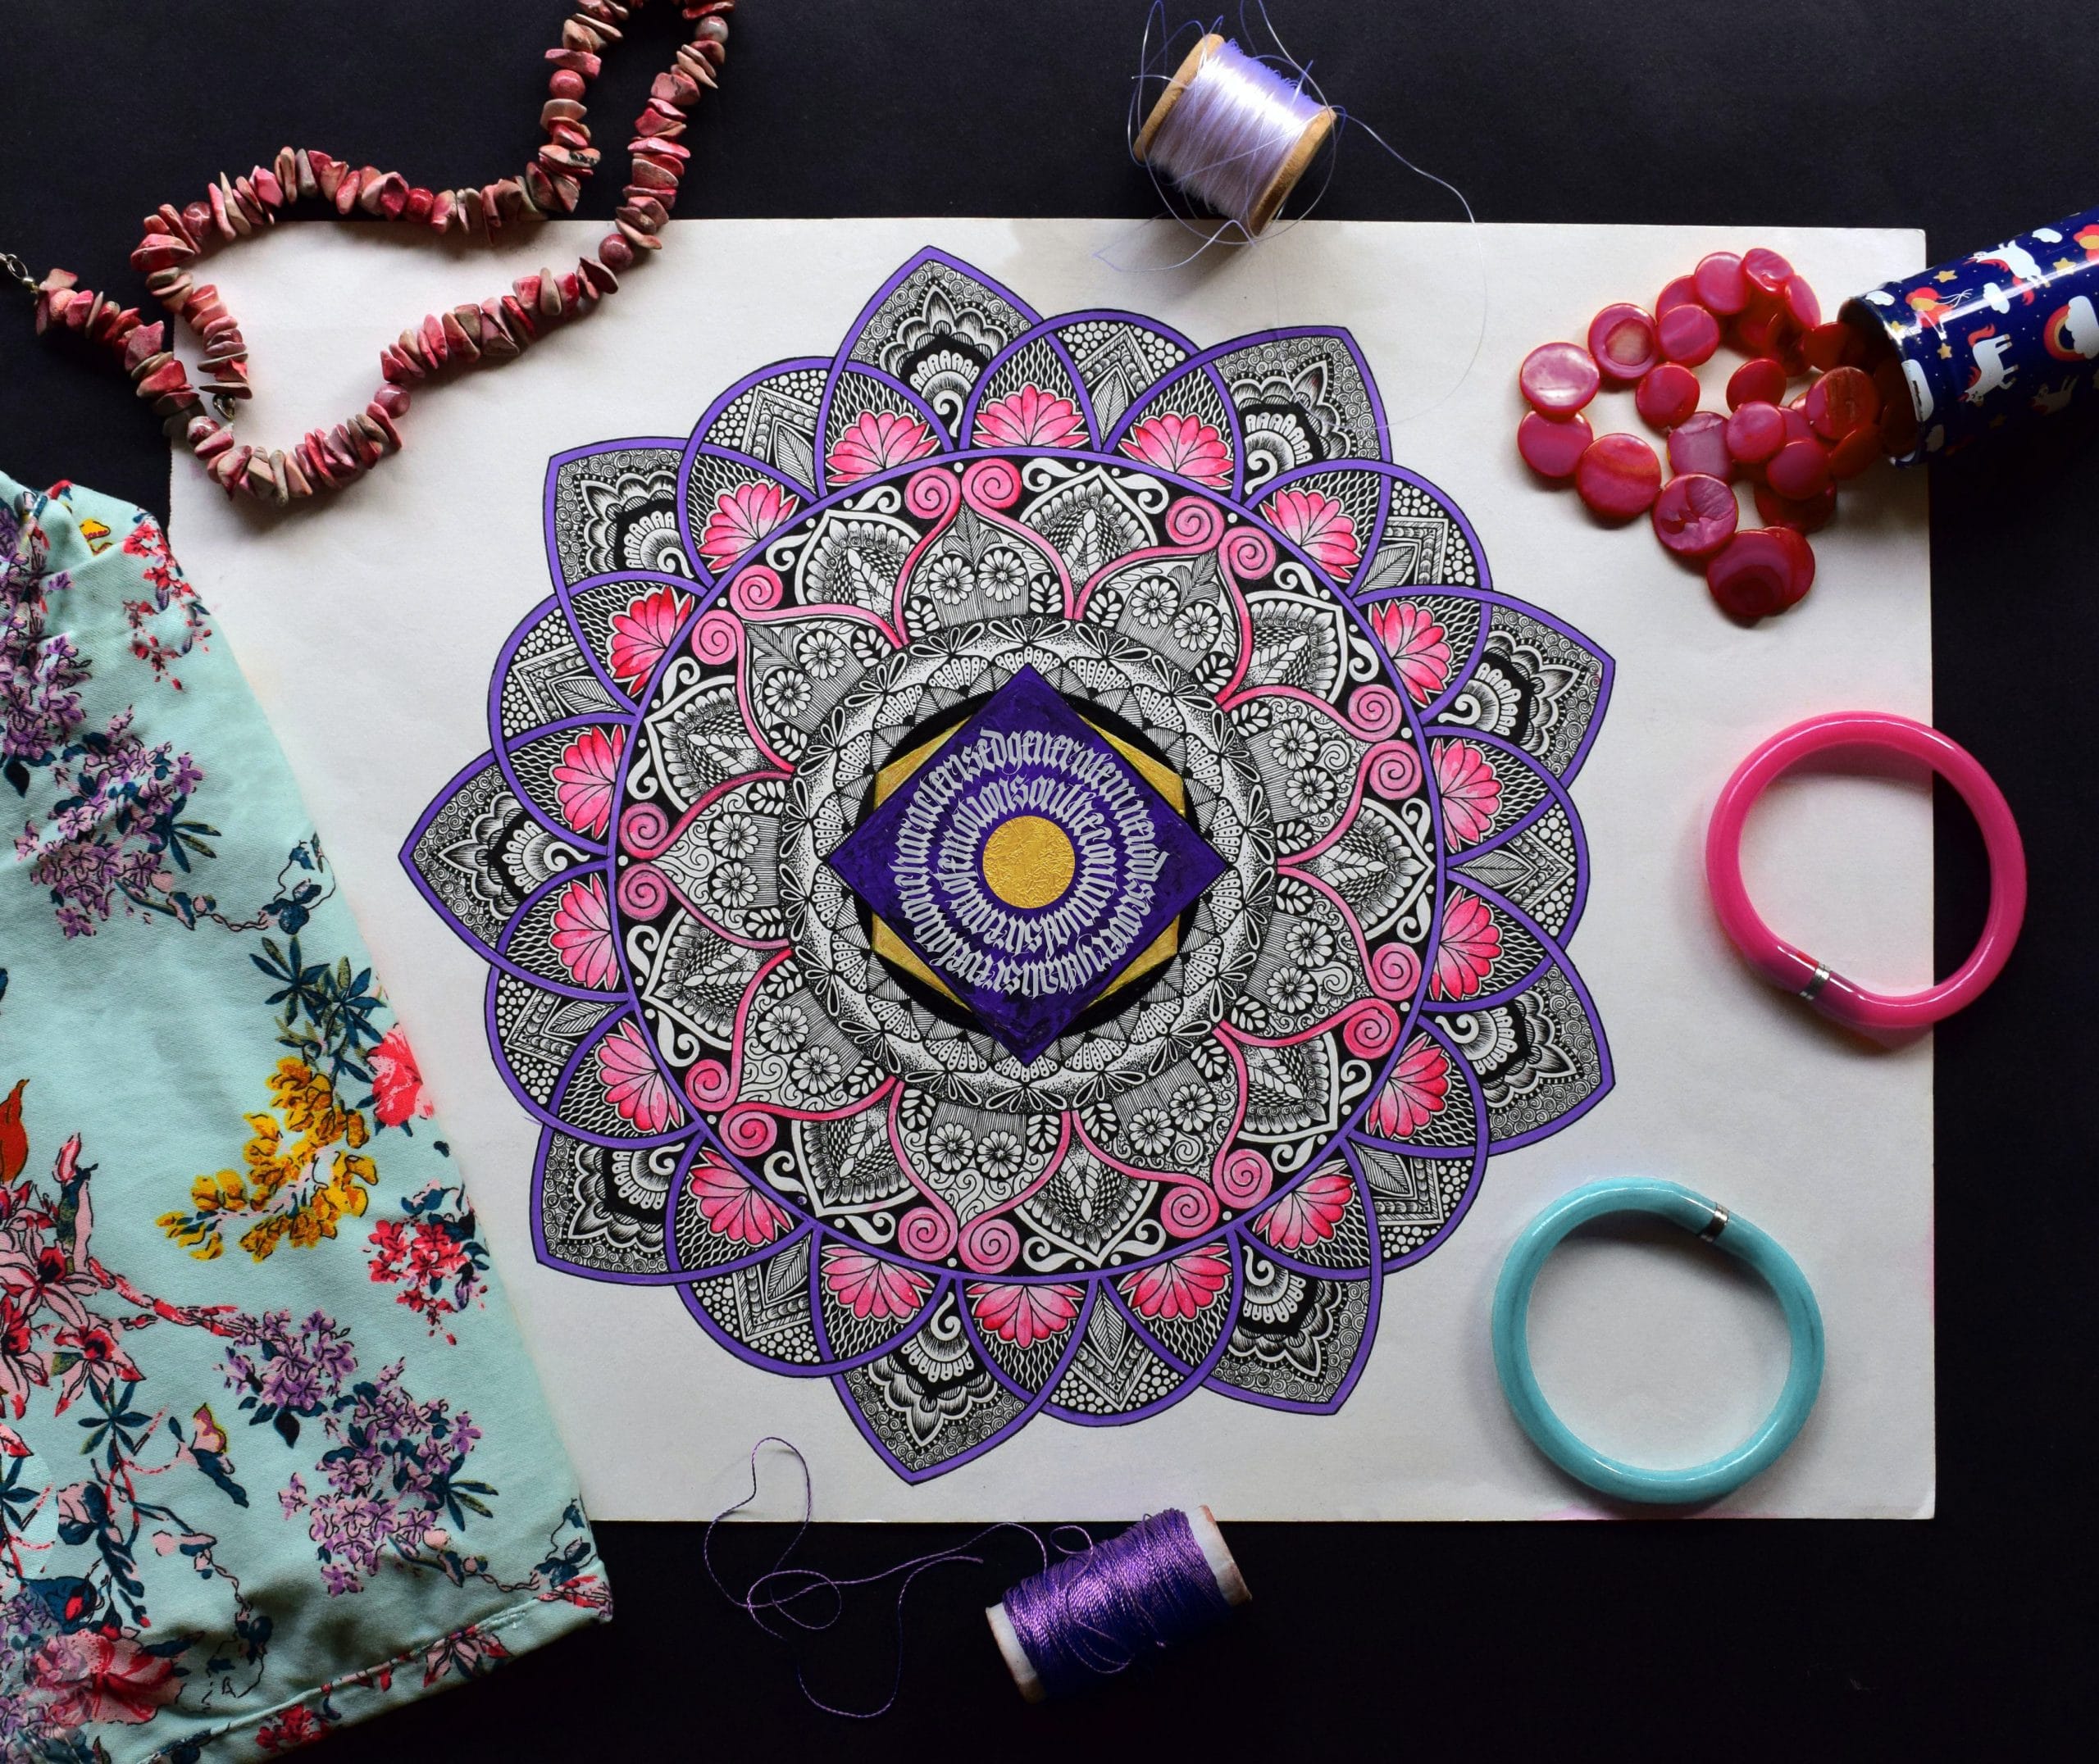 creative mandala making with beads and thread